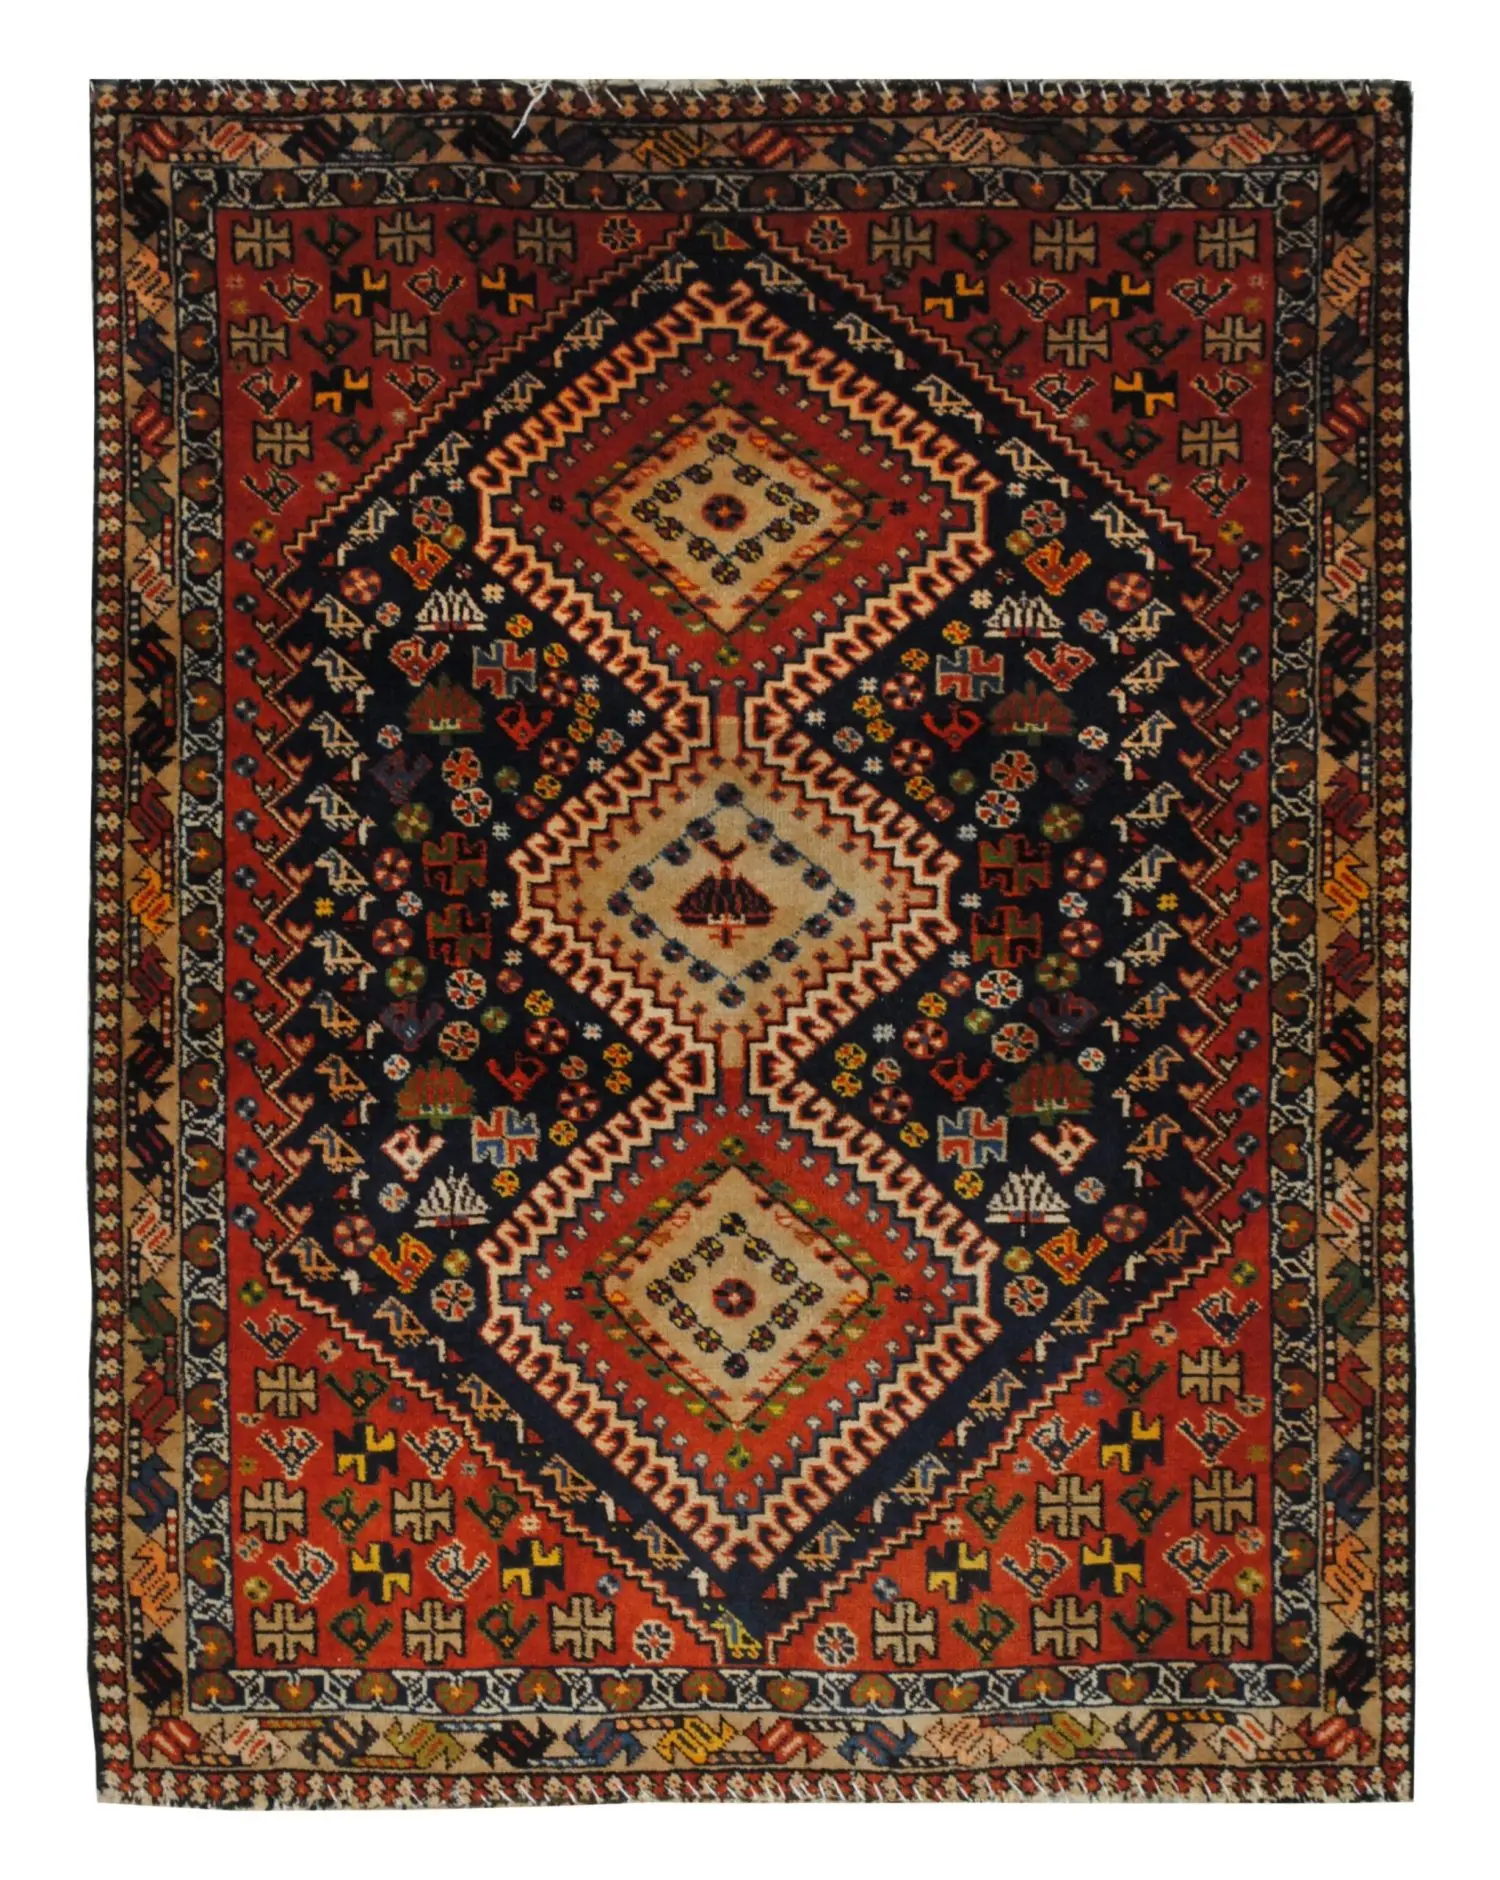 Persian Yallameh 3' 7" x 4' 8" Handmade Area Rug - Shabahang Royal Carpet